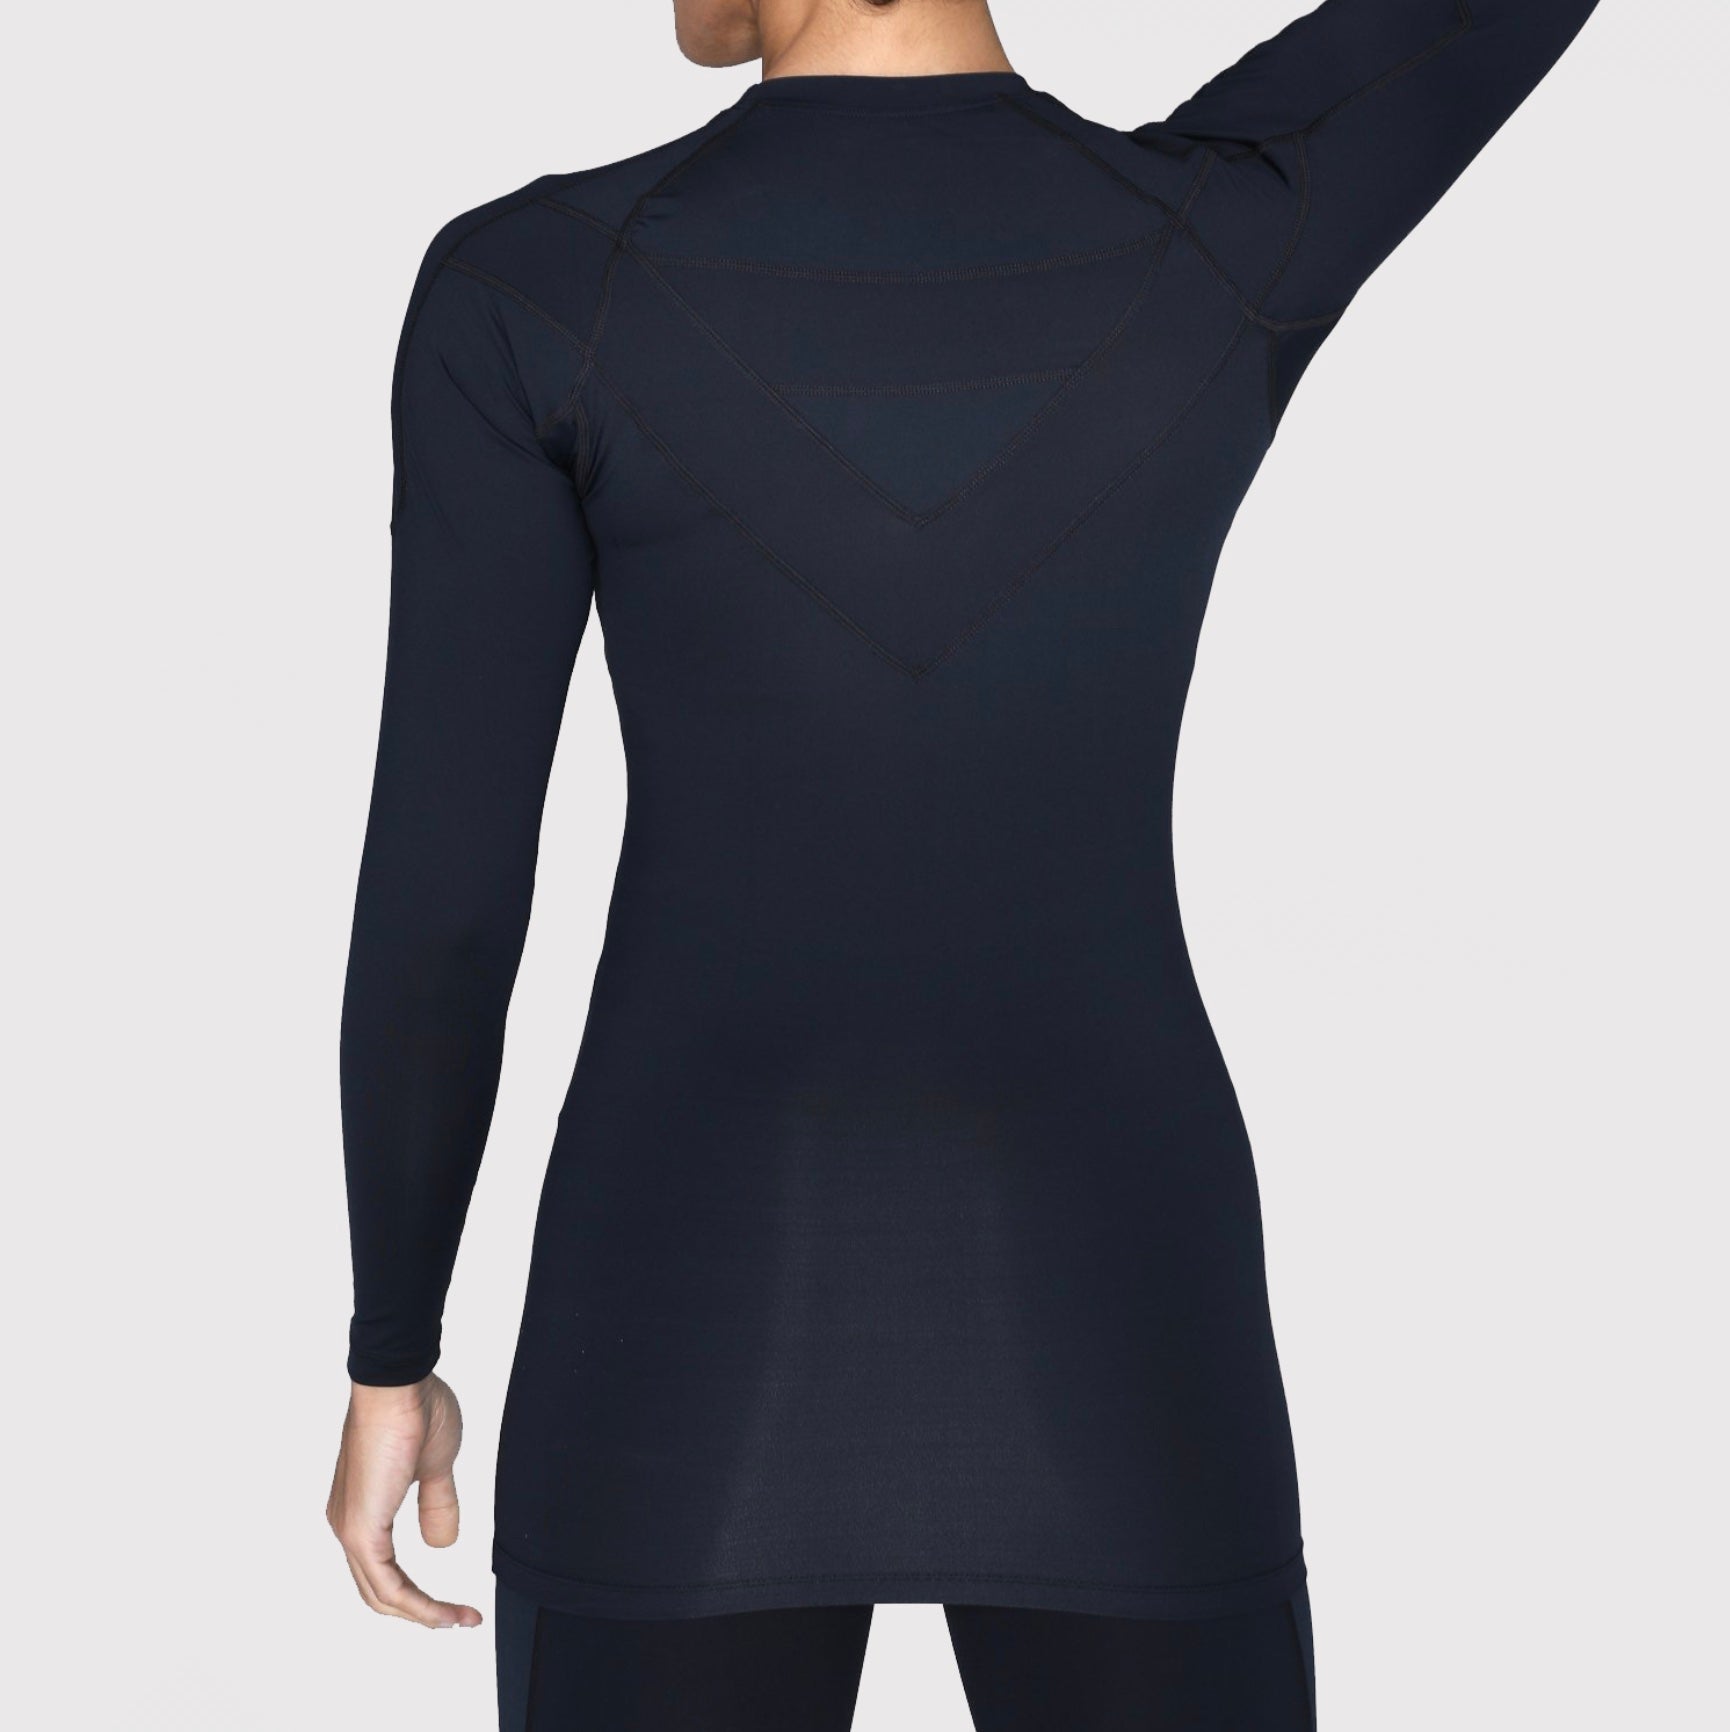 DFND Women's Long Sleeve Compression Shirt Black / M